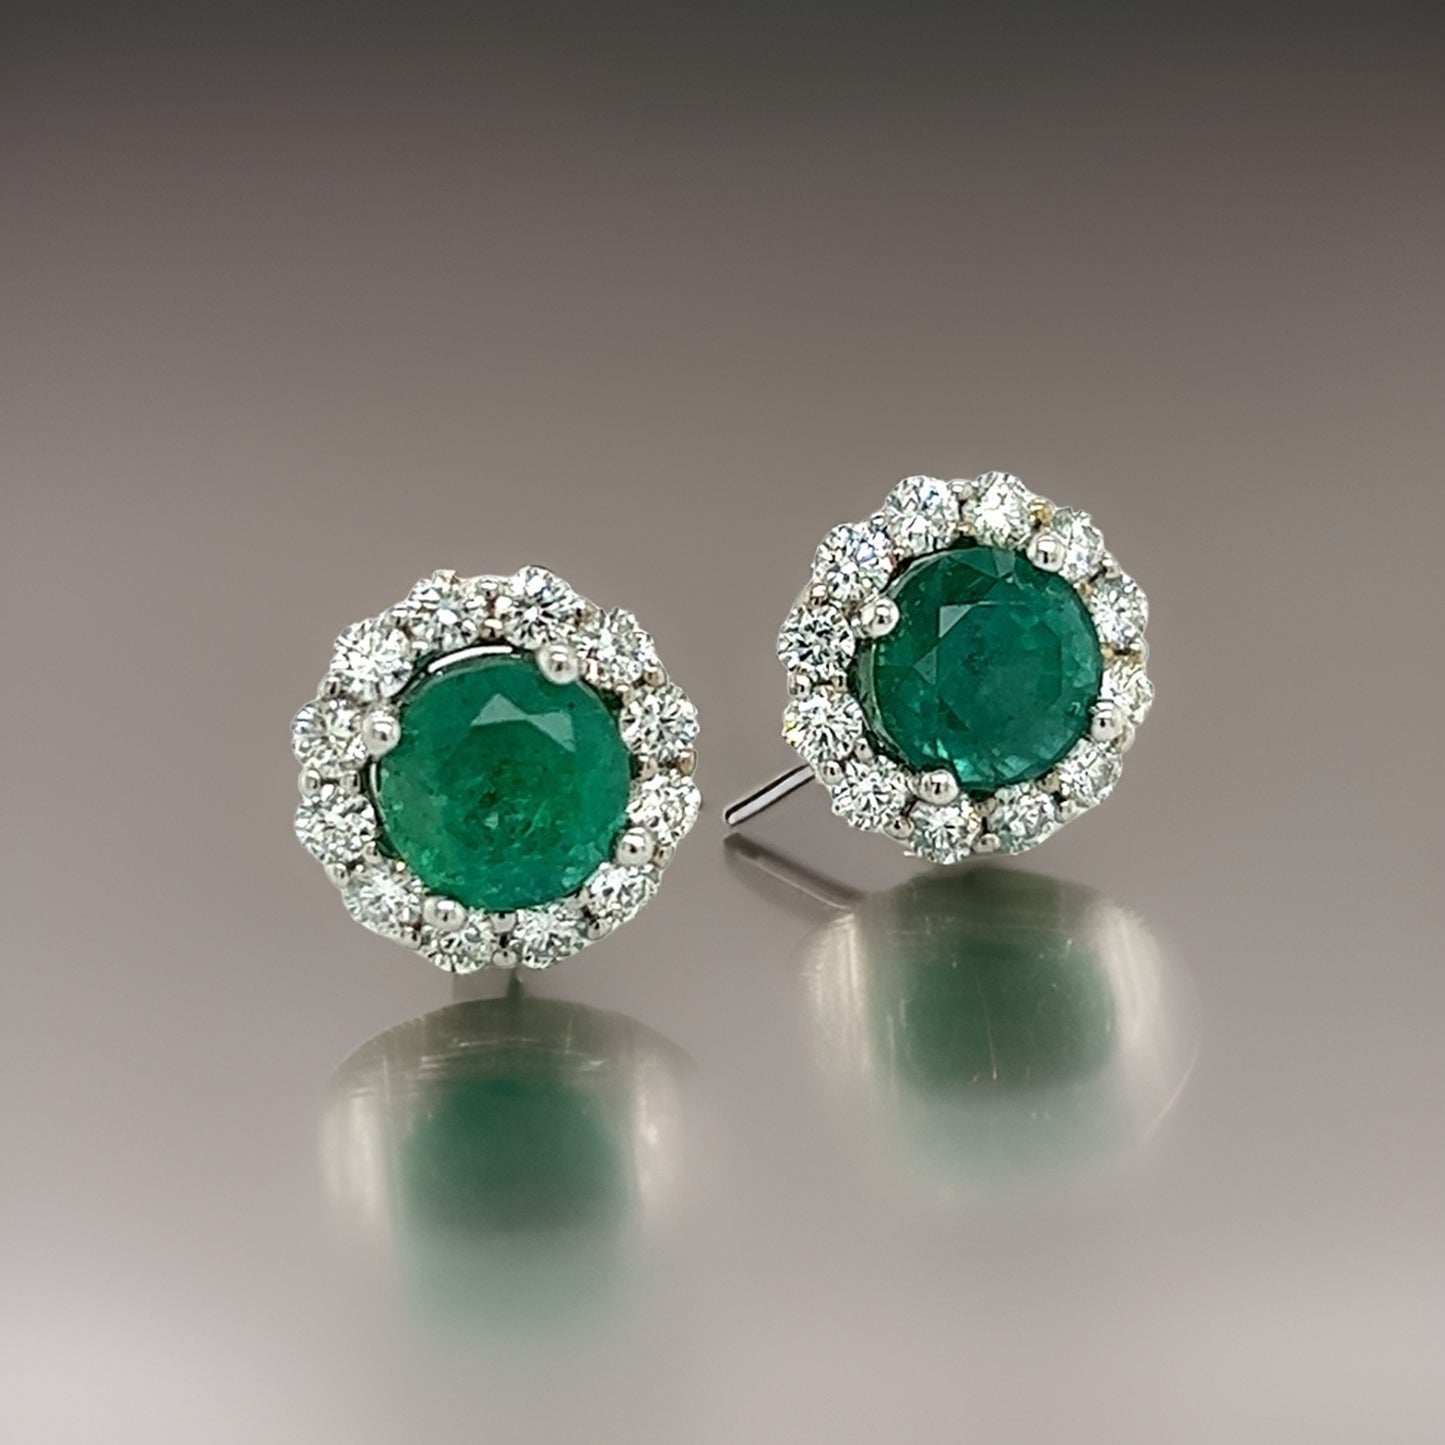 Natural Emerald Diamond Earrings 18k White Gold 3.8 TCW Certified $7,950 210746 - Certified Fine Jewelry